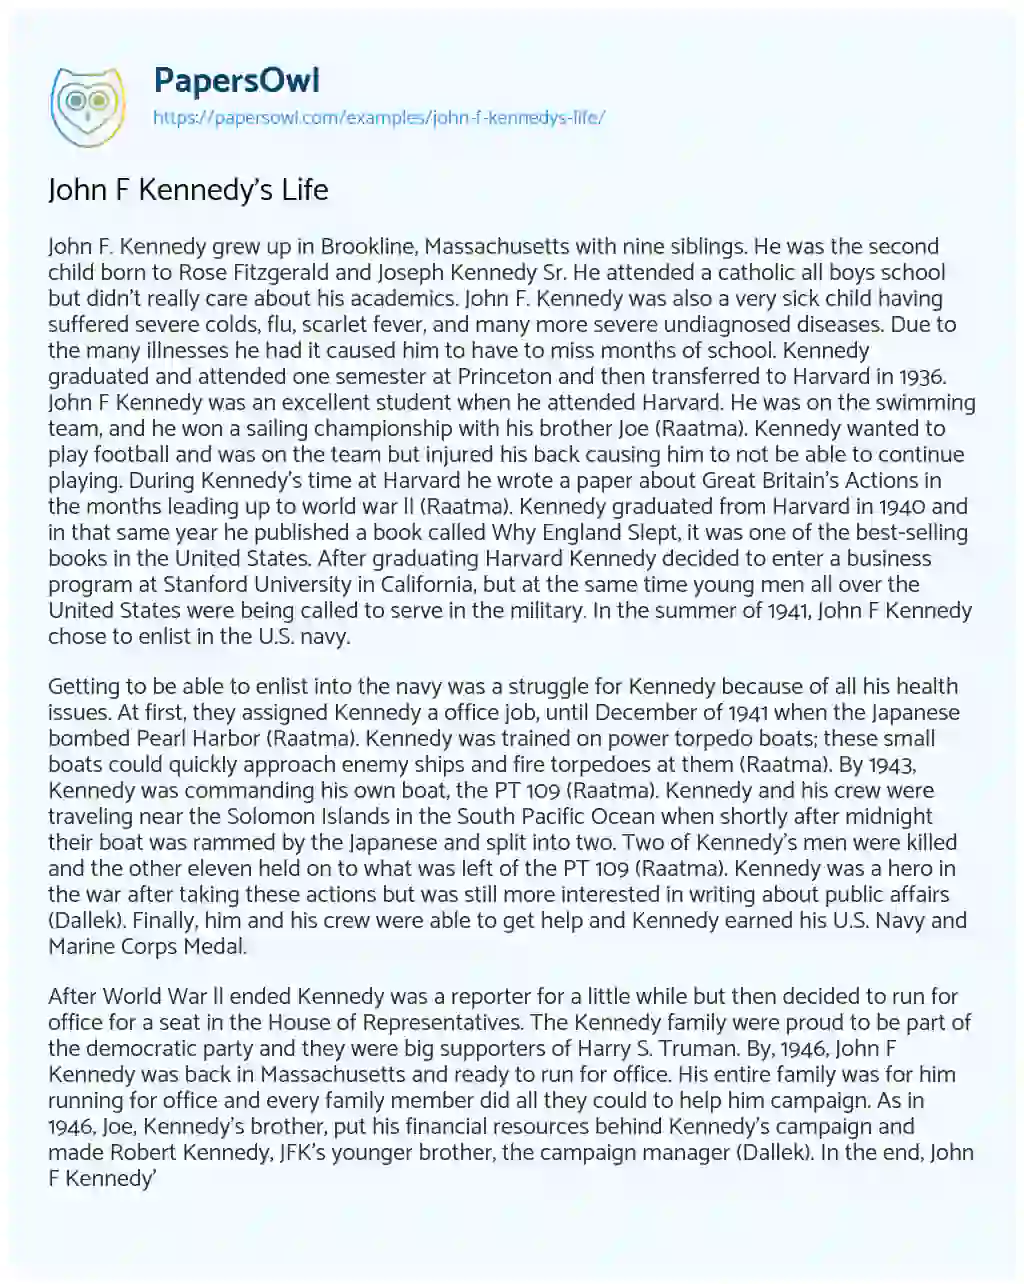 Essay on John F Kennedy’s Life